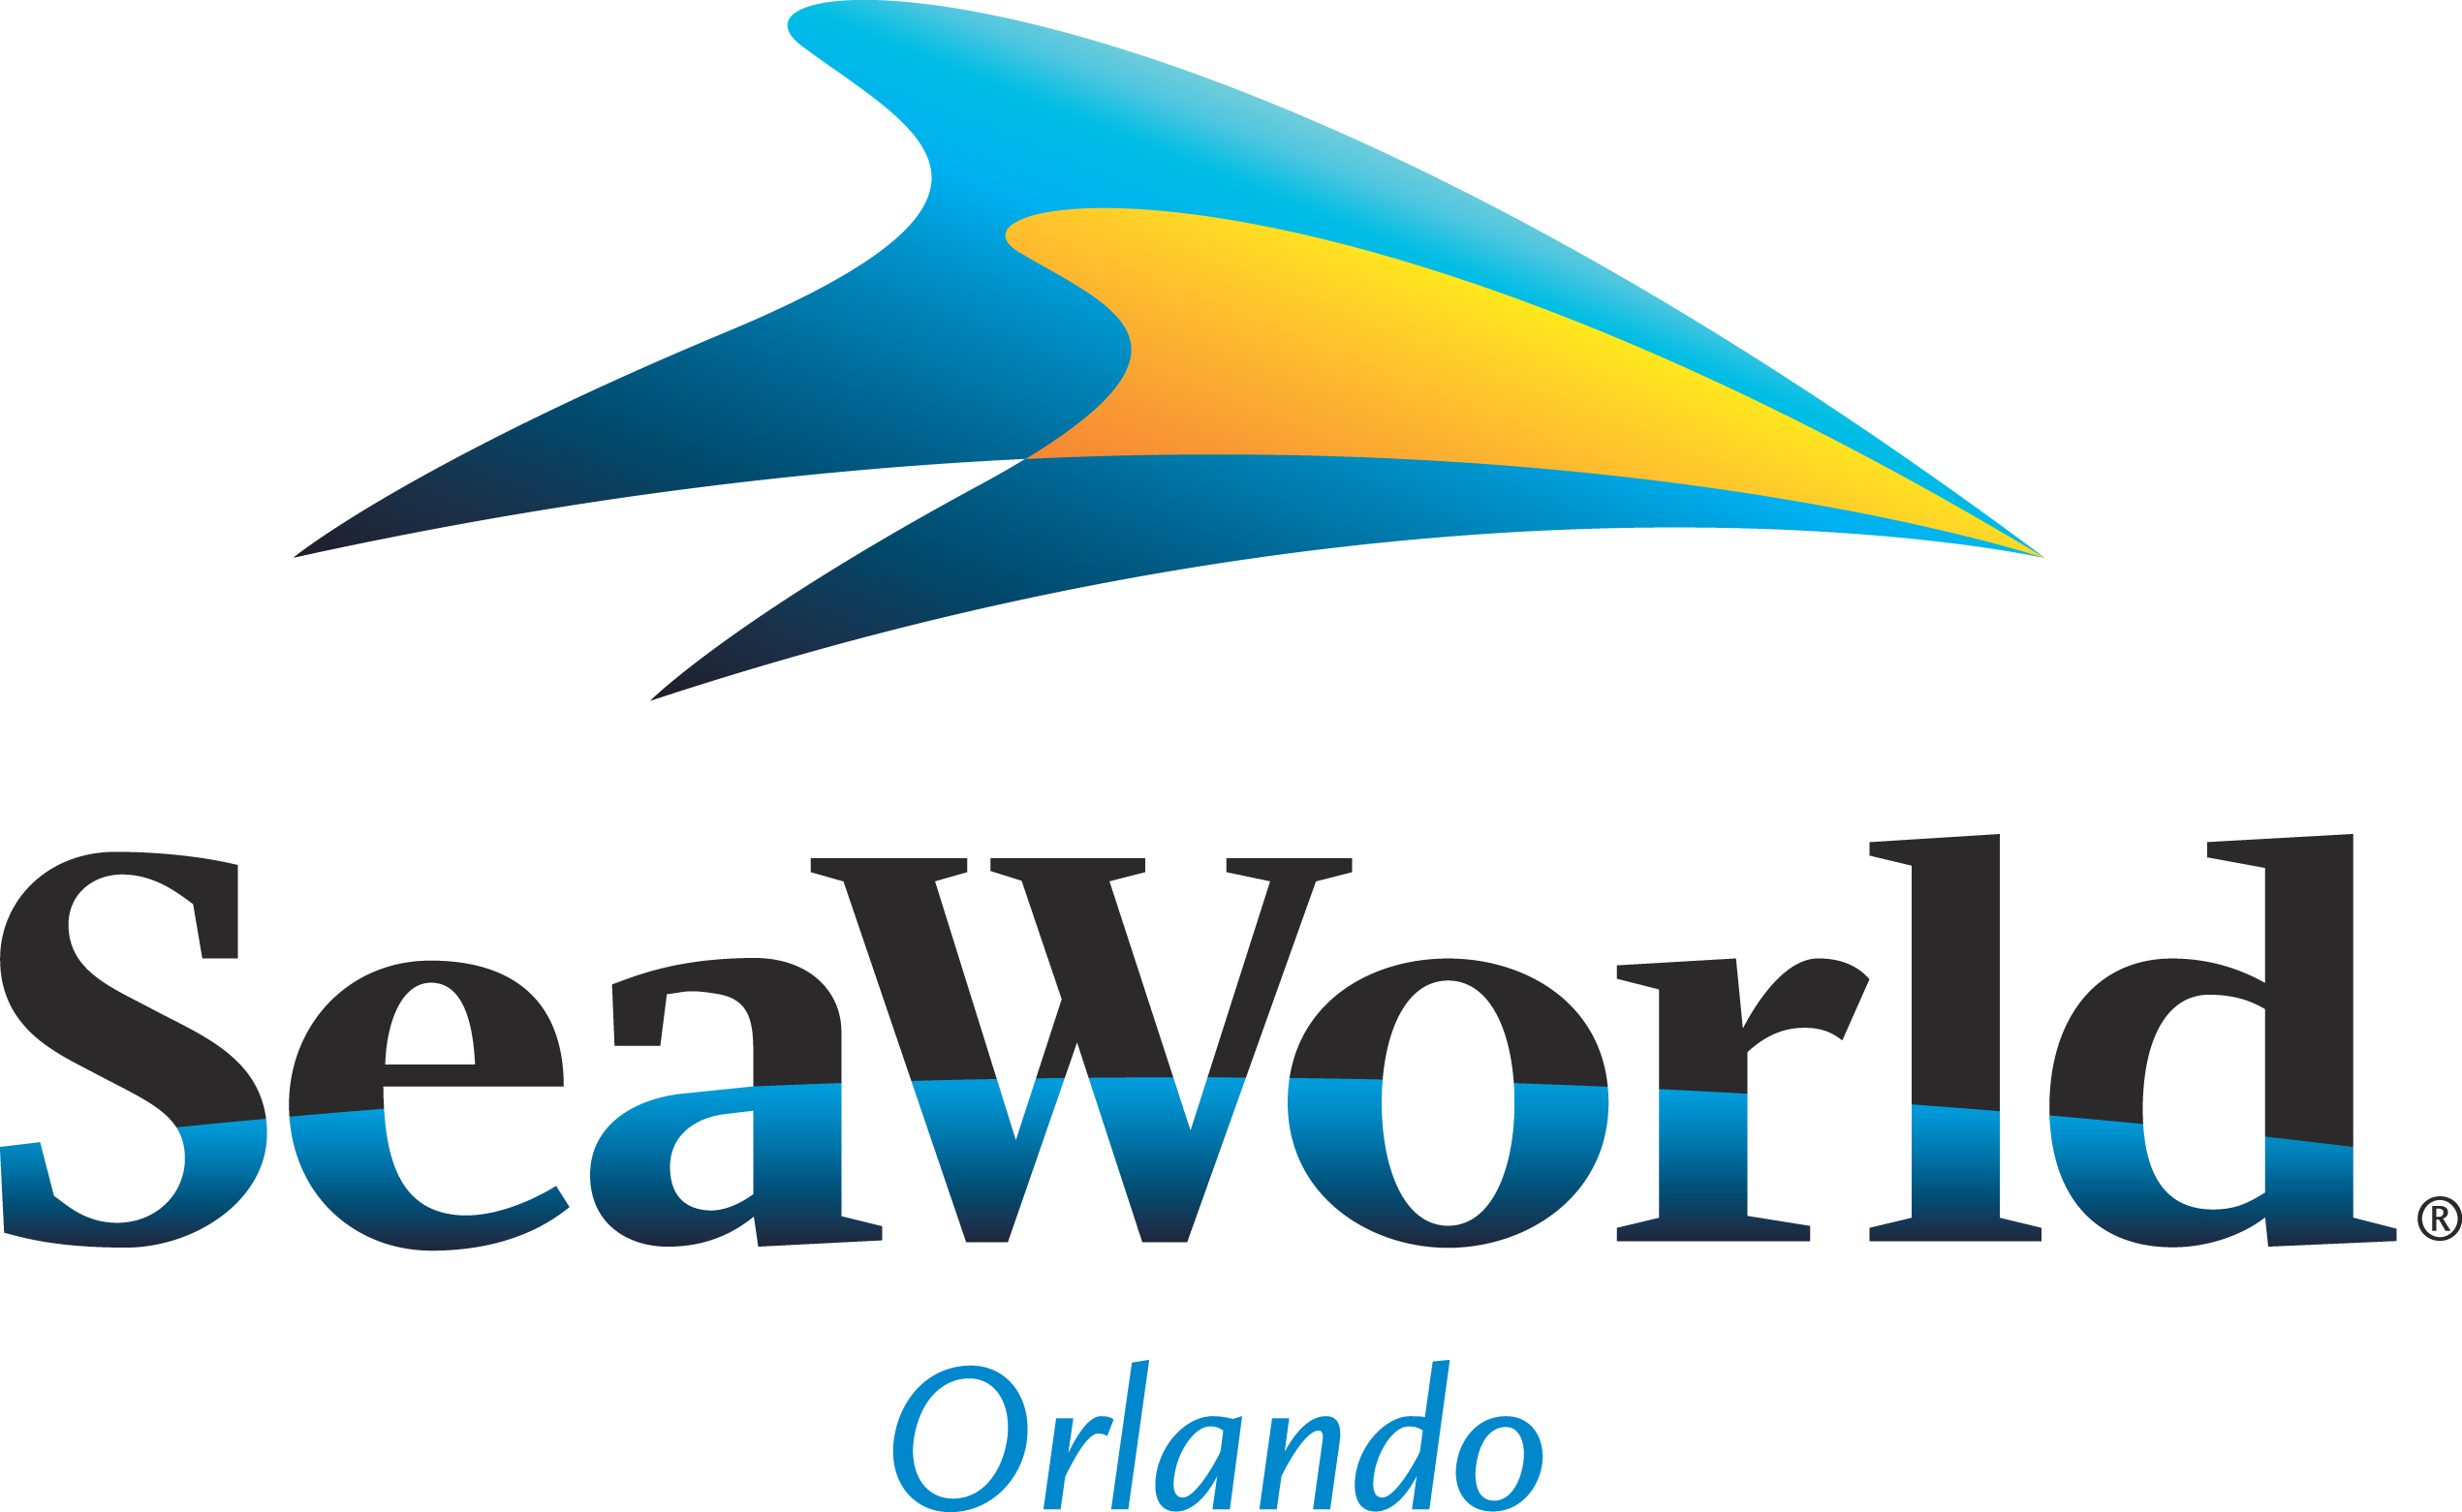 Get information on attractiosn inside SeaWorld theme park.